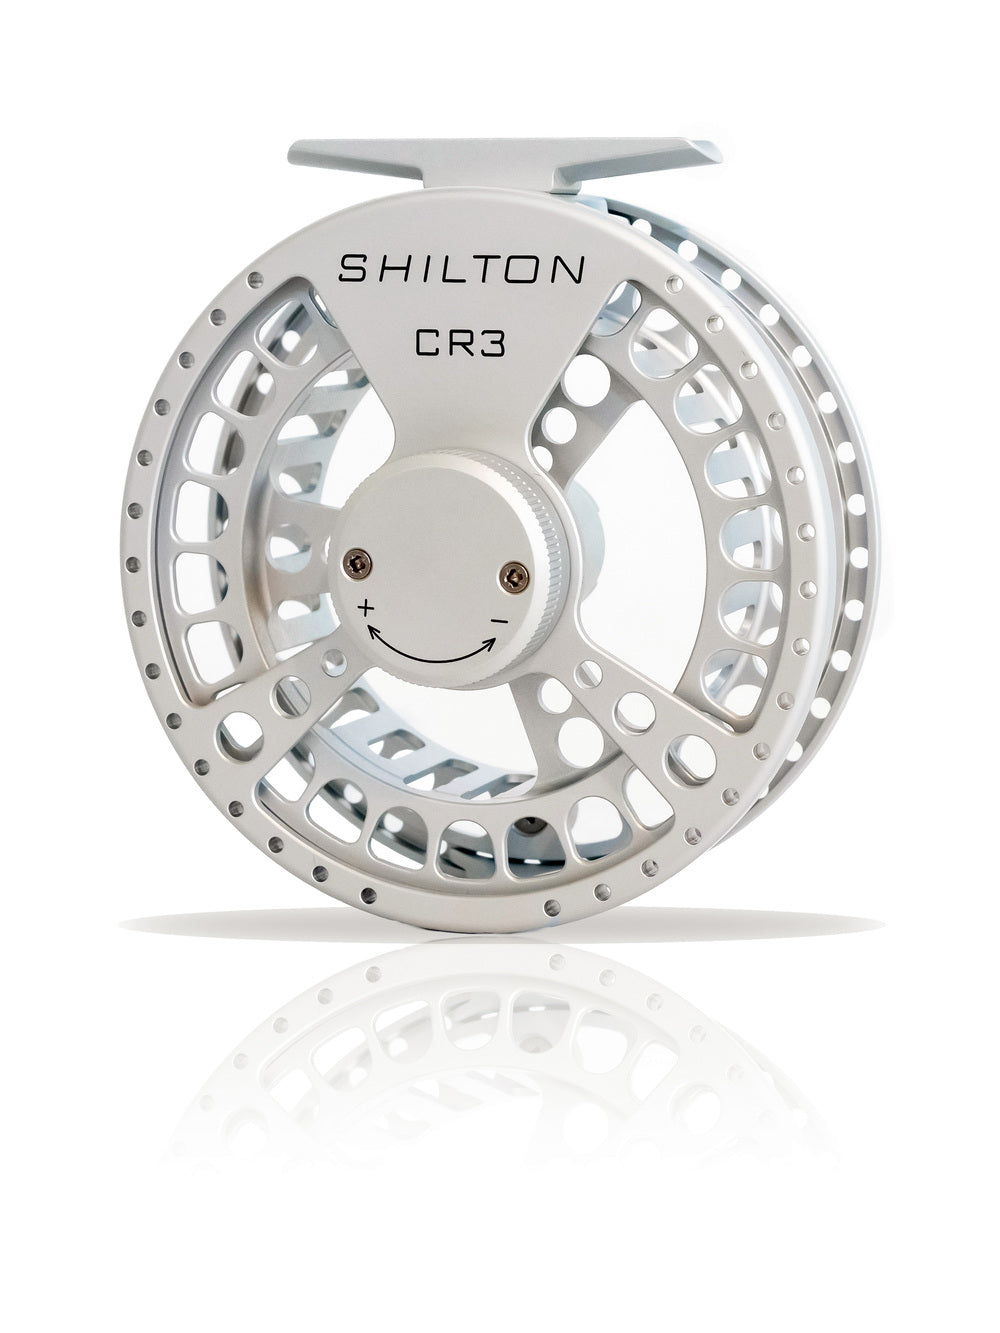 Shilton CR3 Reel (5-6wt) in Titanium Silver